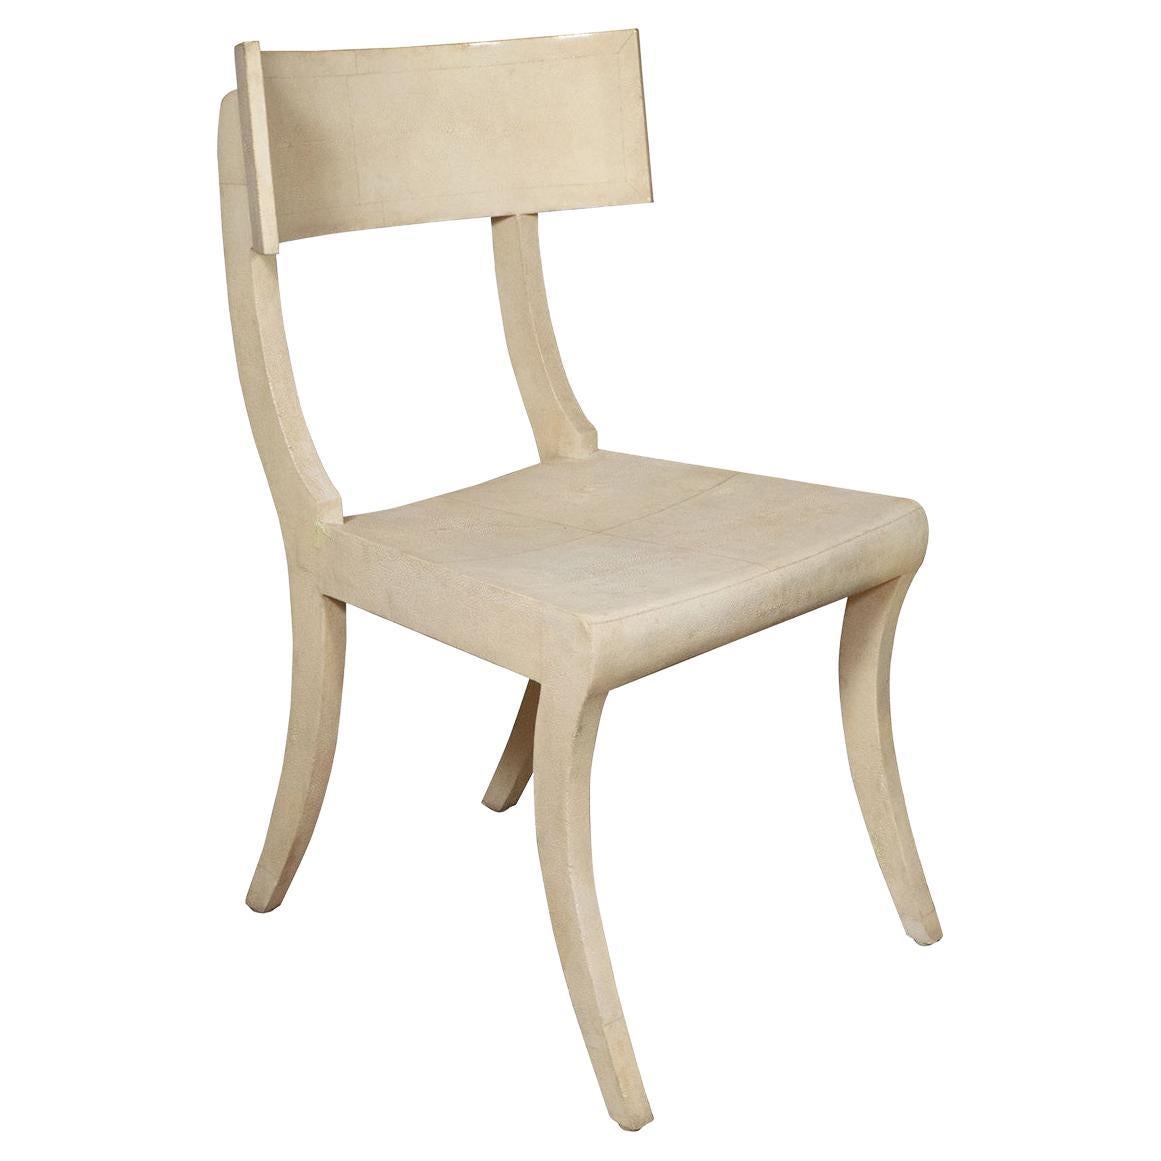 Shagreen Klismos Style Chair  For Sale